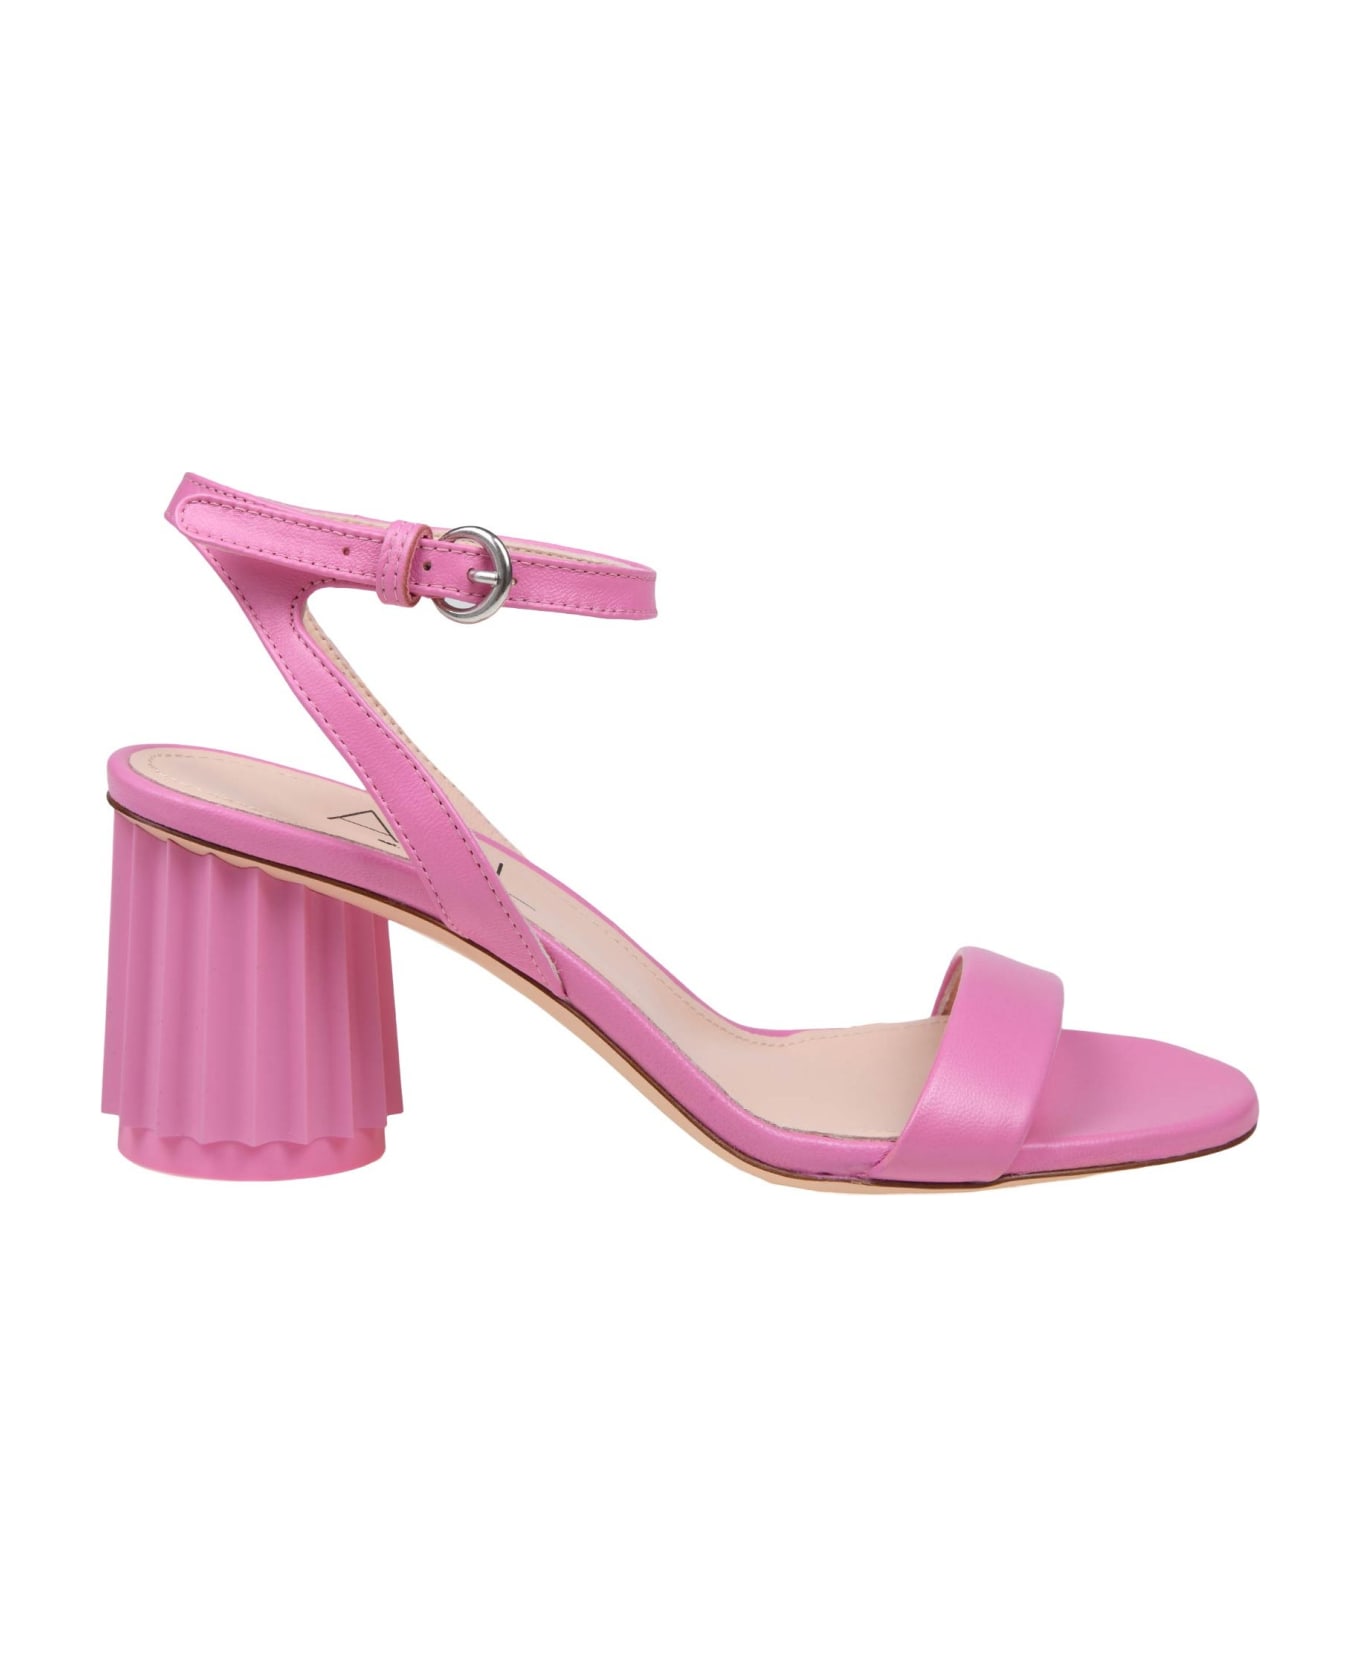 AGL Pink Leather Sandal With Column Heel - Temptation 